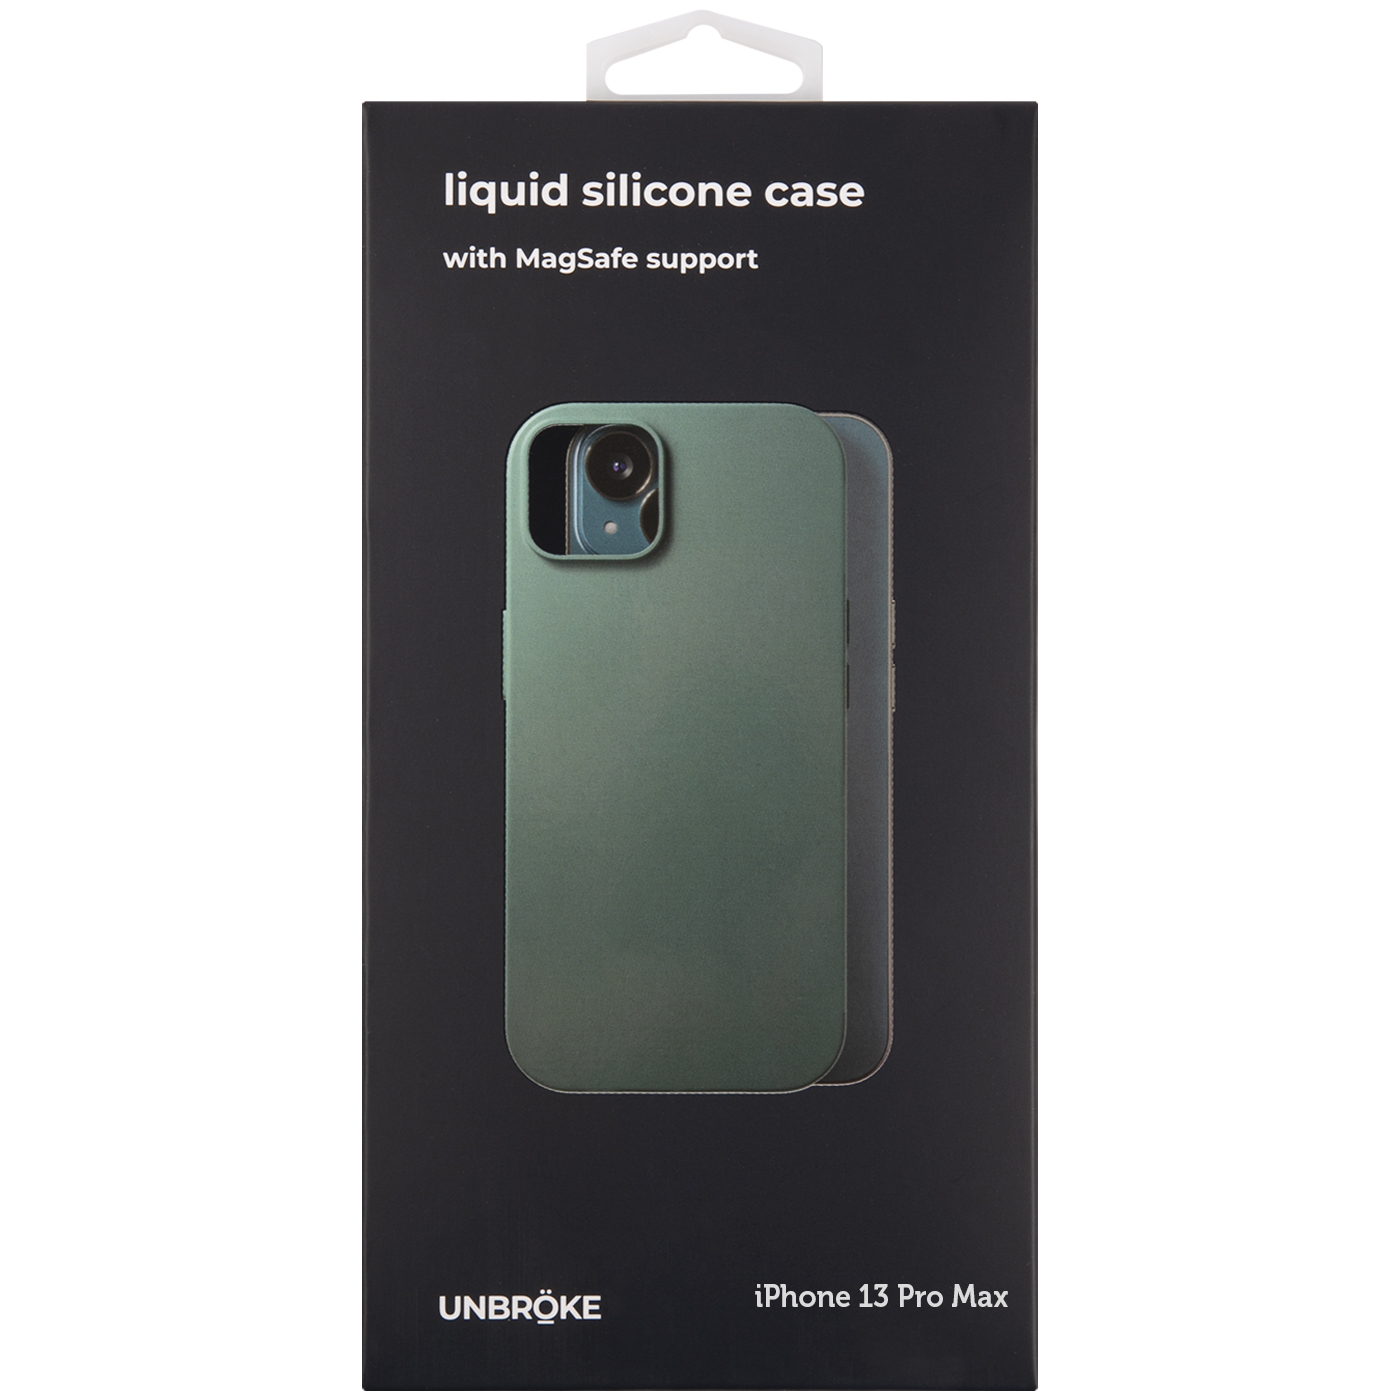 Чехол накладка UNBROKE liquid silicone case MagSafe support для iPhone 13 Pro Max, зеленая